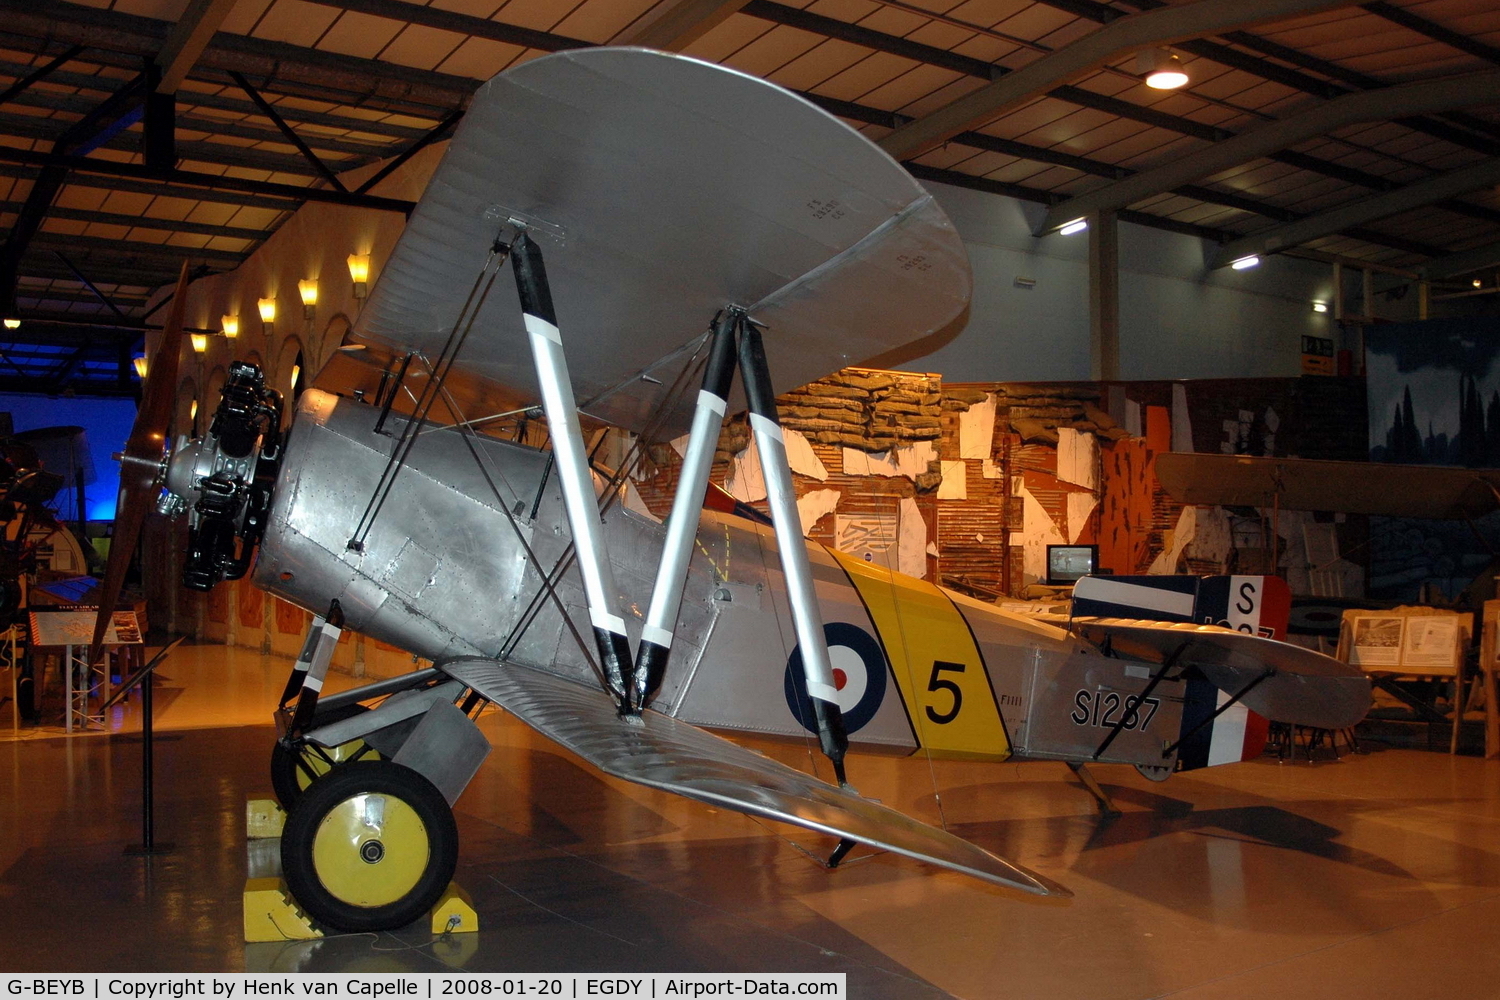 G-BEYB, 1979 Fairey Flycatcher (Westward Airways Ltd replica) C/N WA3, Flycatcher replica, now preserved in Fleet Air Arm Museum as S1287